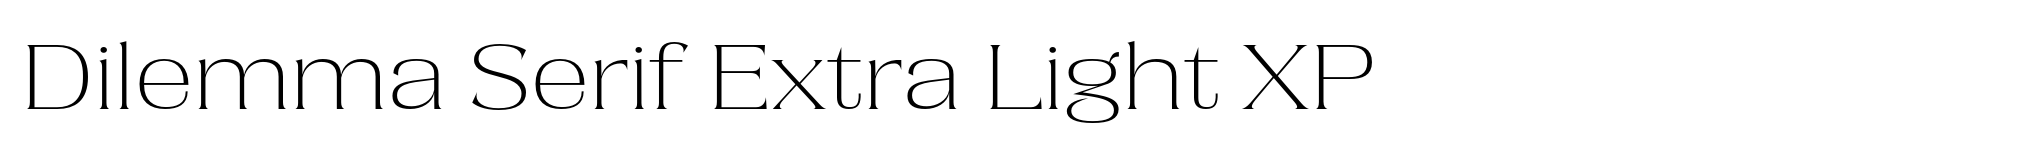 Dilemma Serif Extra Light XP image